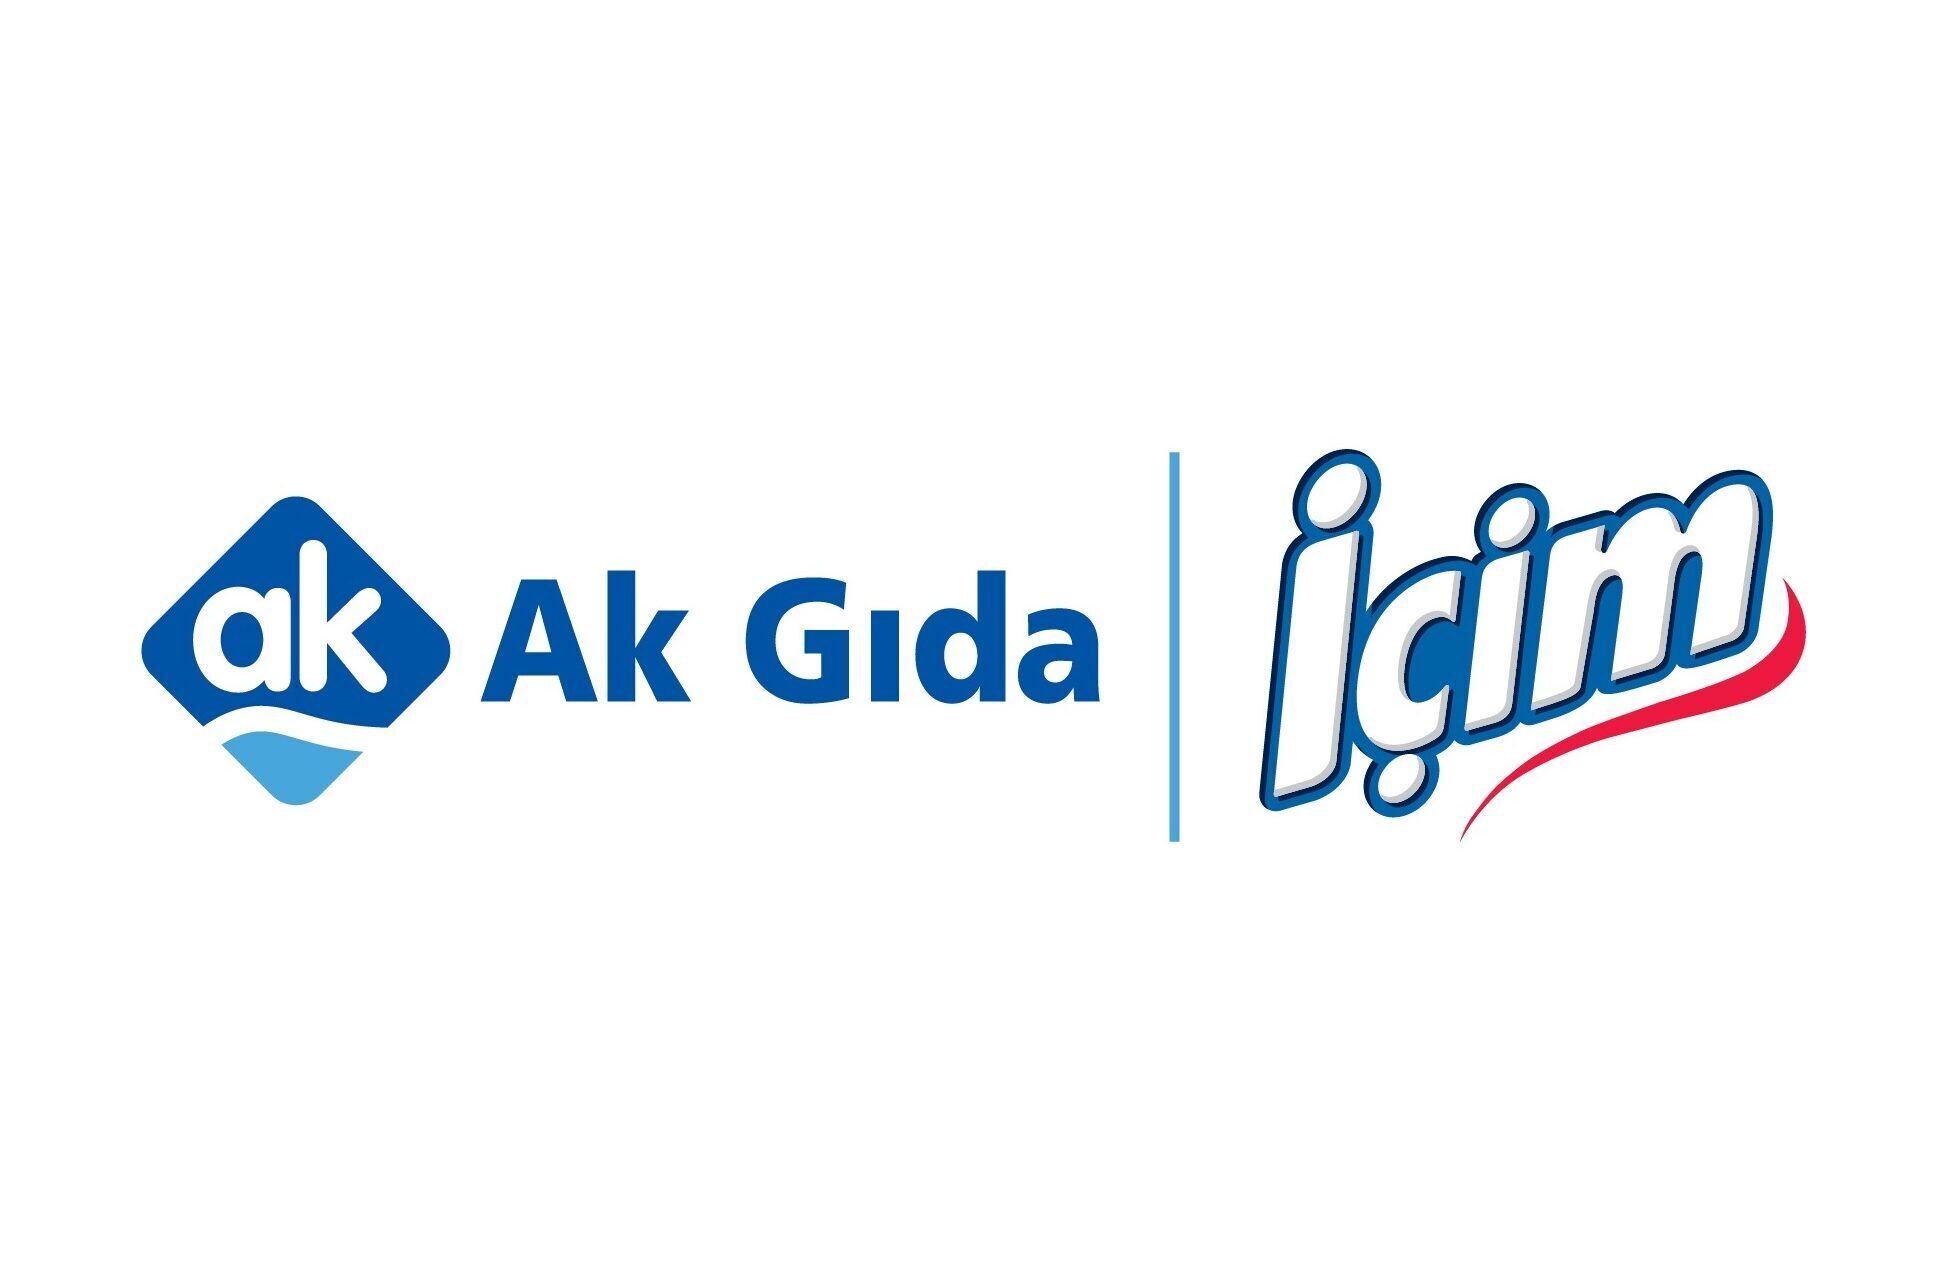 akgida_icim_logo-1